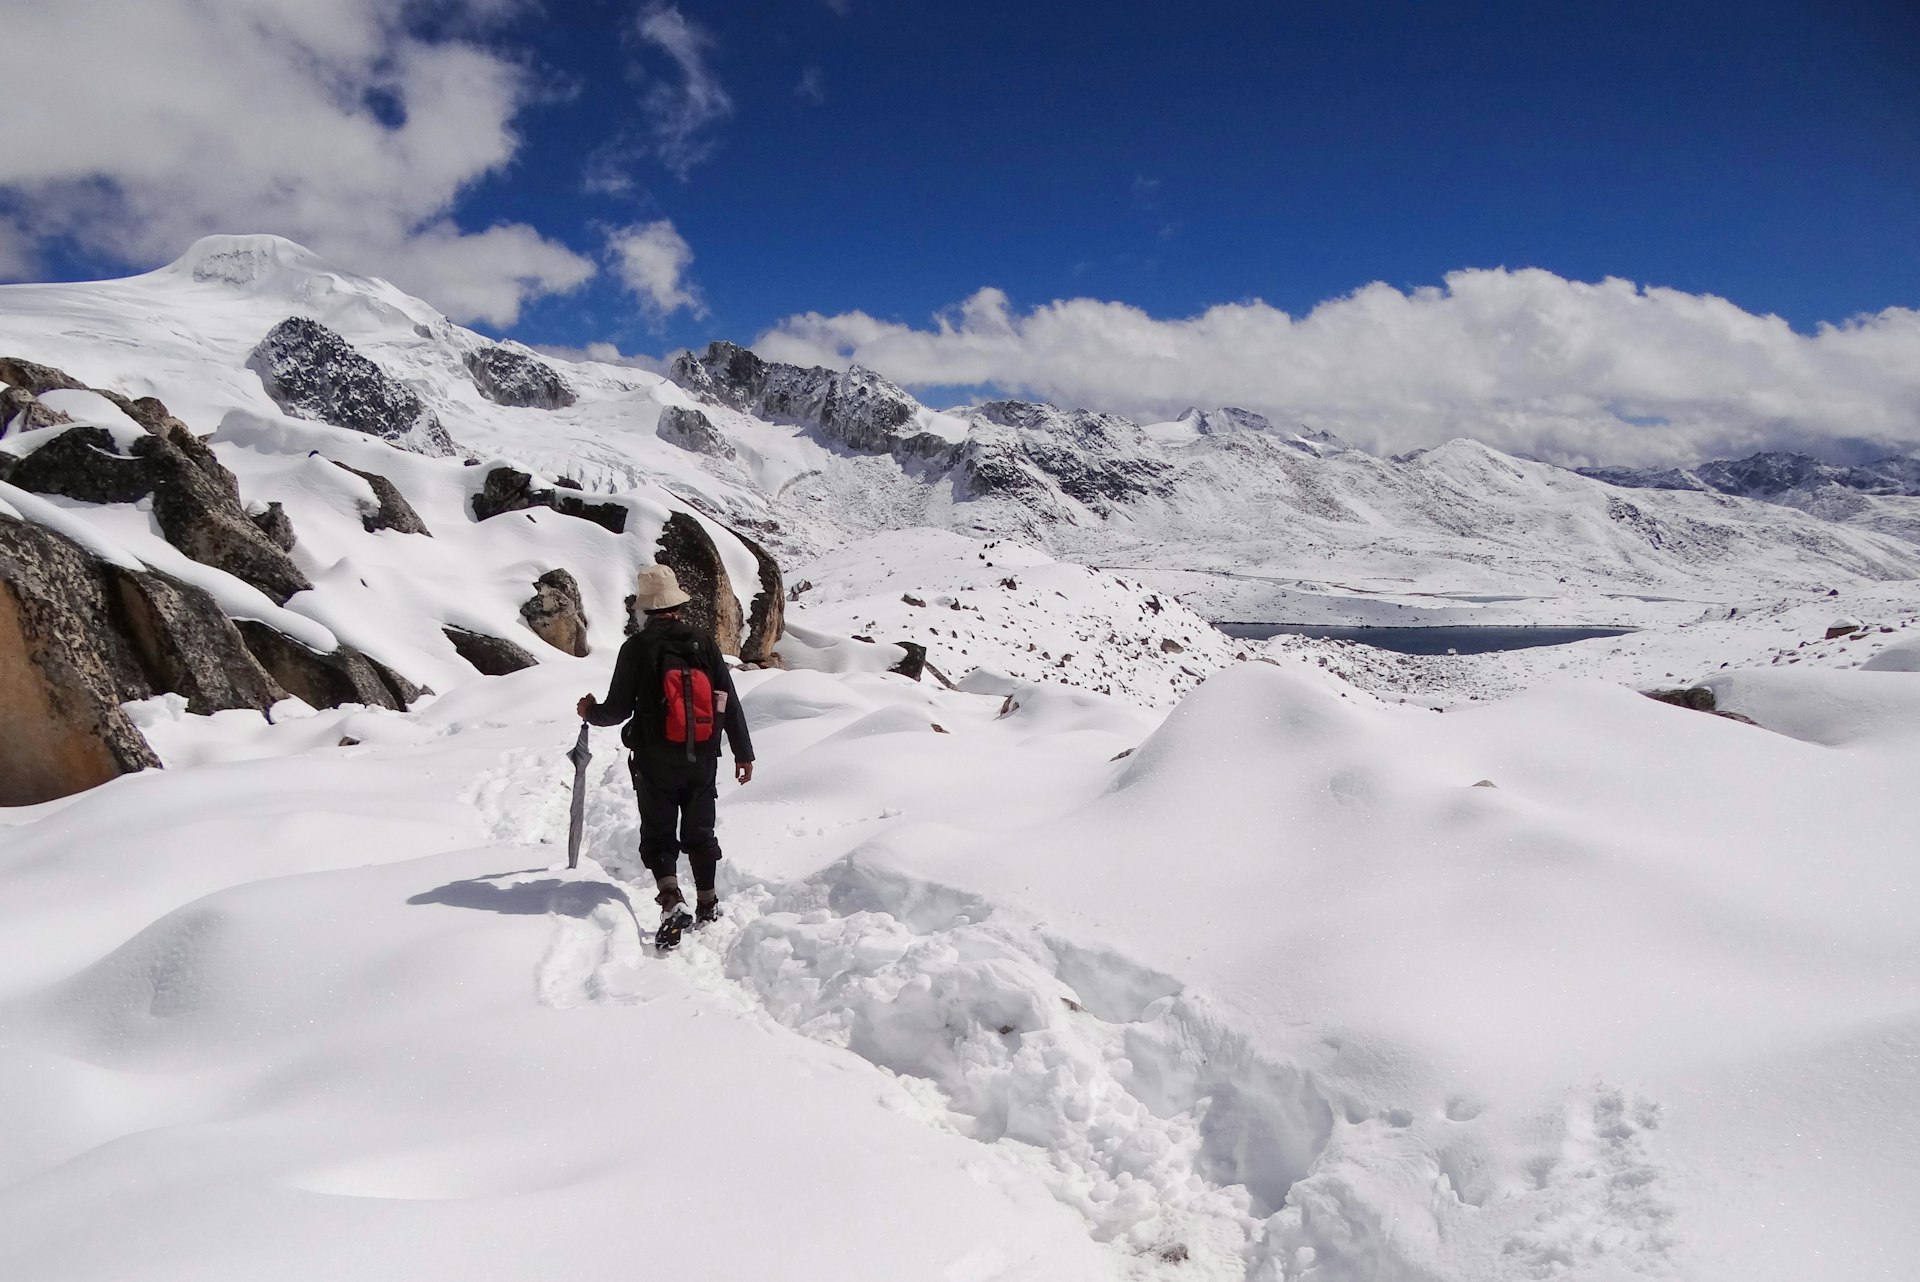 A man in snow gear walks through thick, heavy white snow in the Himalaya as part of Bhutan's Snowman Trek